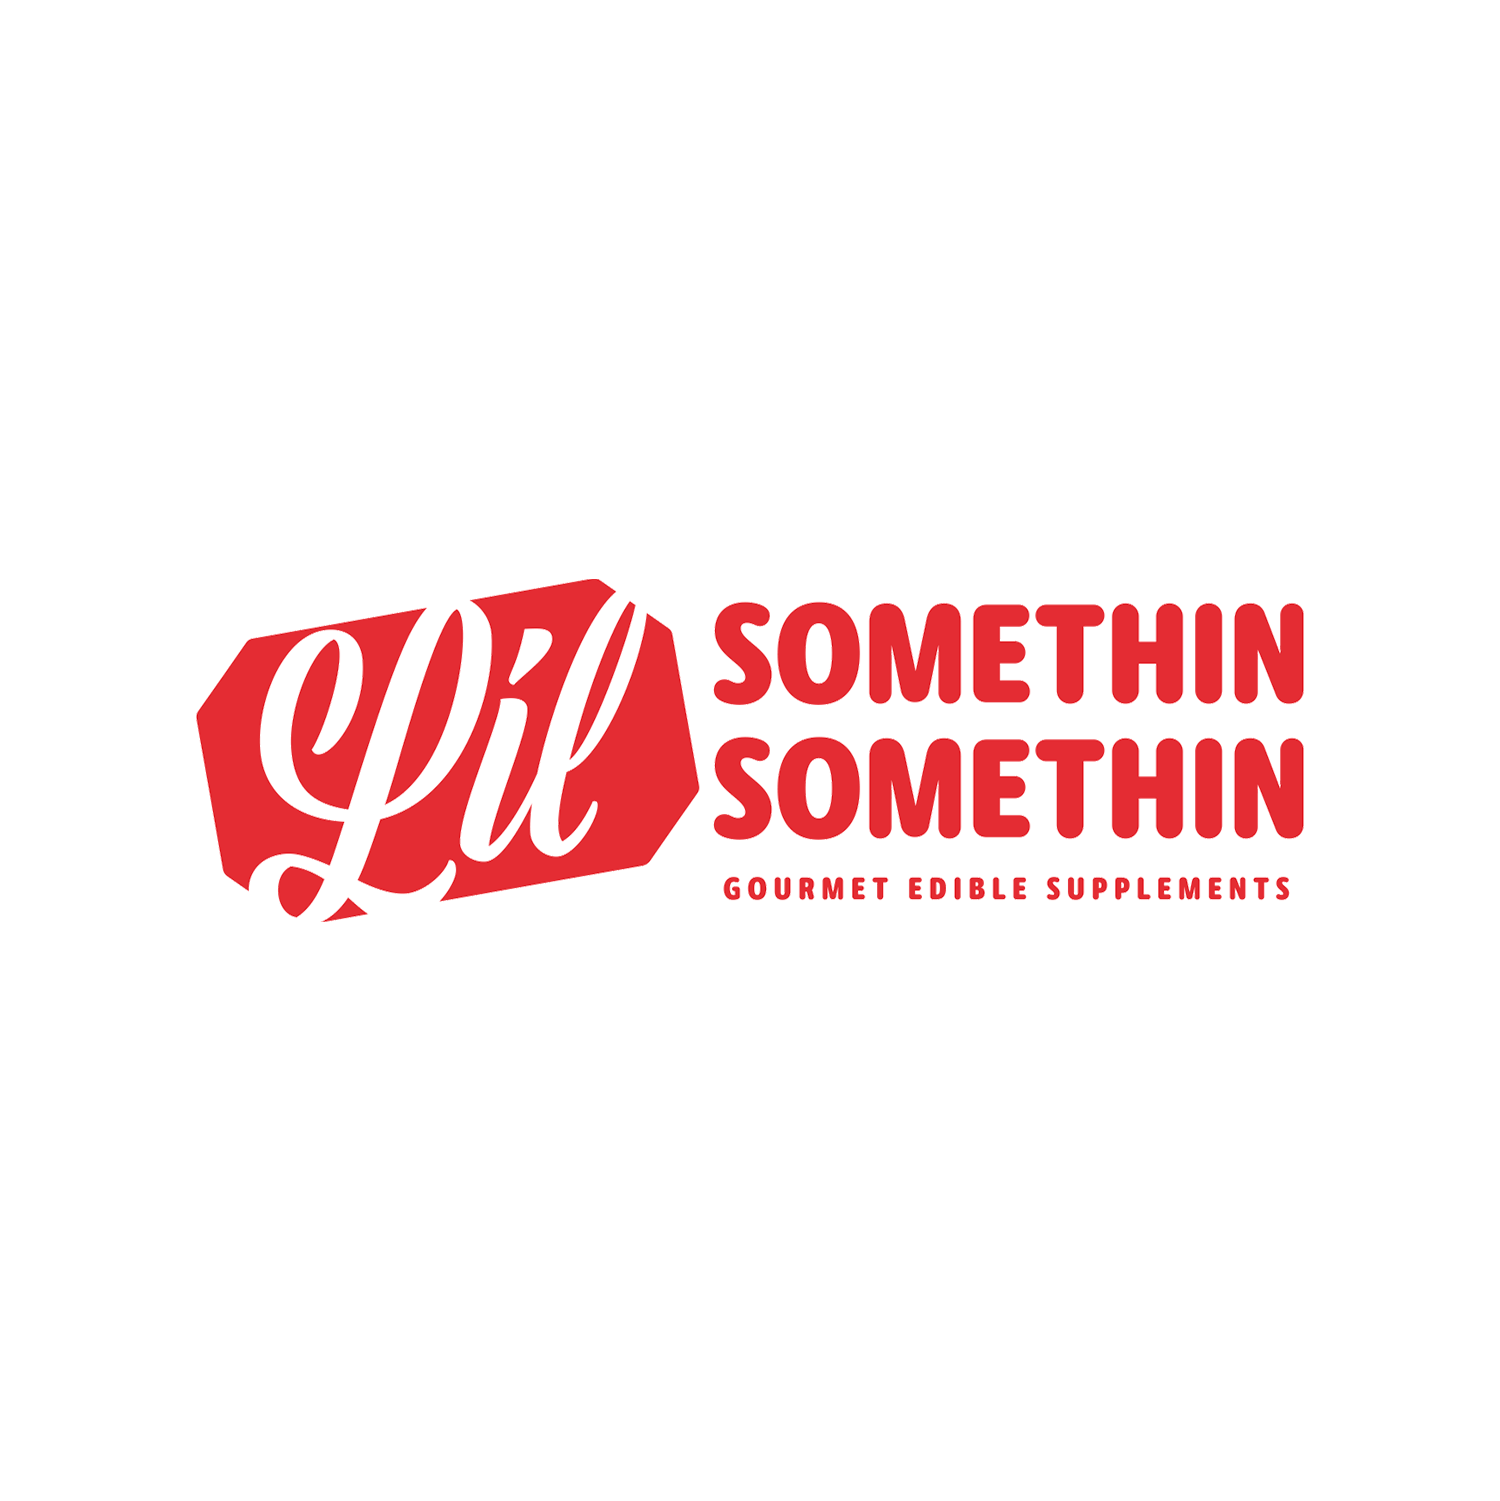 Lil Somethin Somethin logo by OLSON MCINTYRE